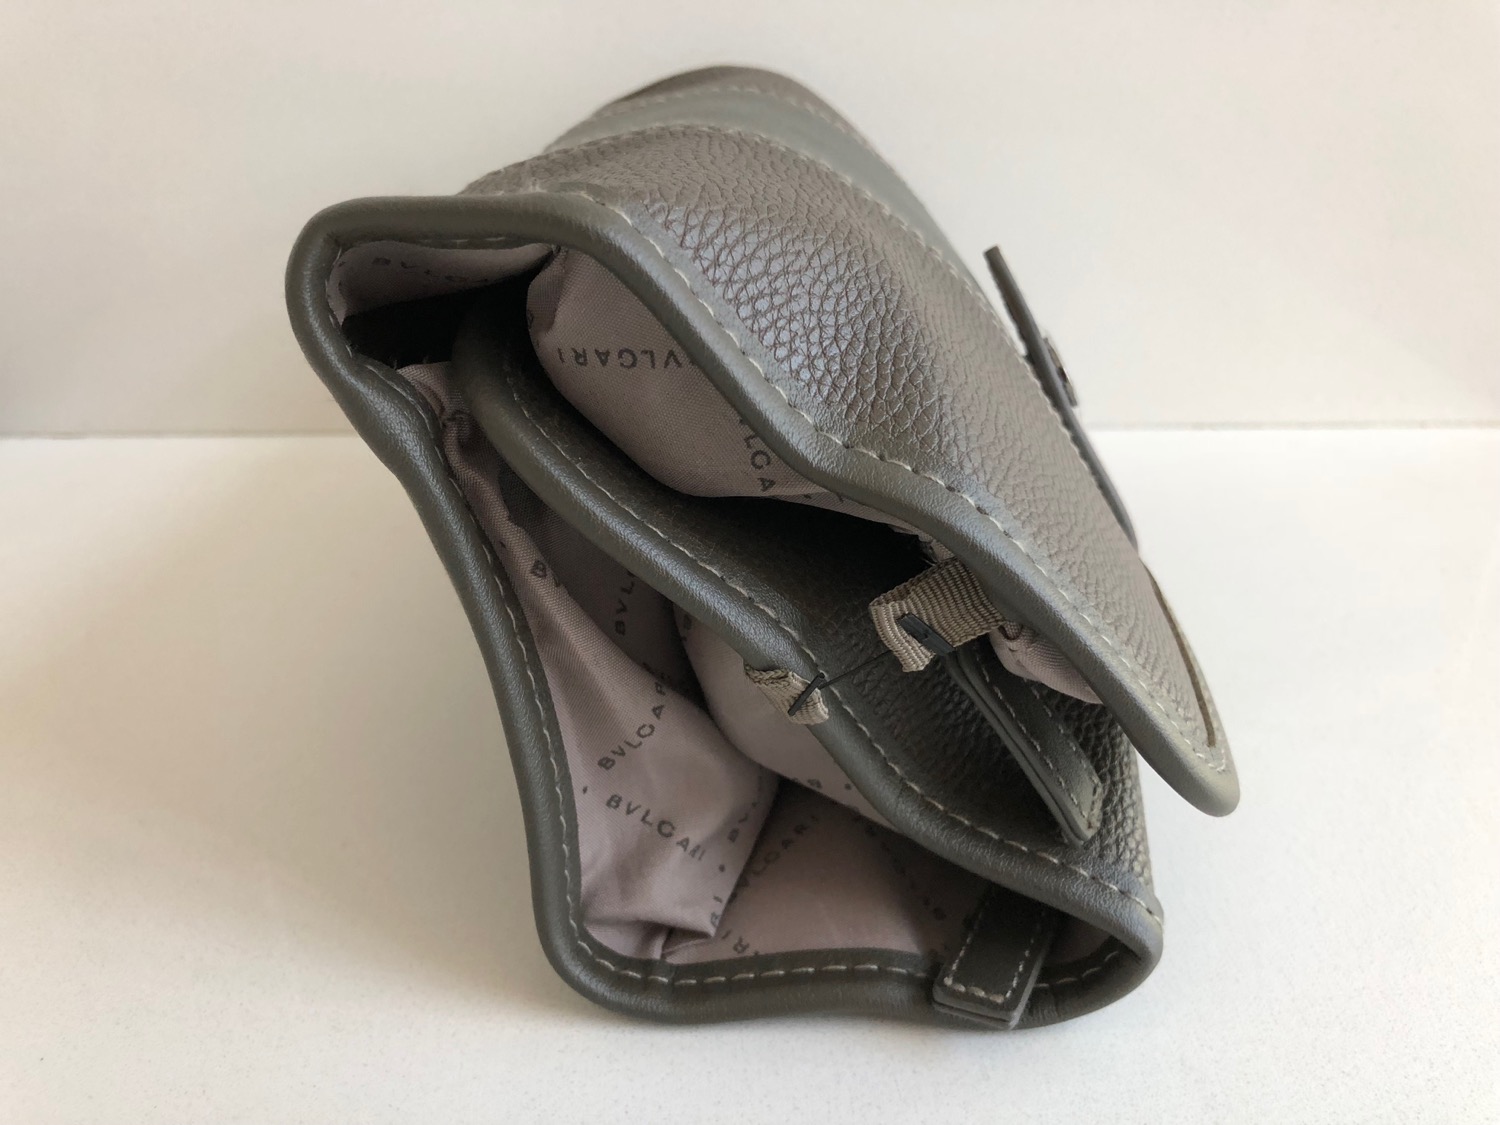 a grey purse with a zipper